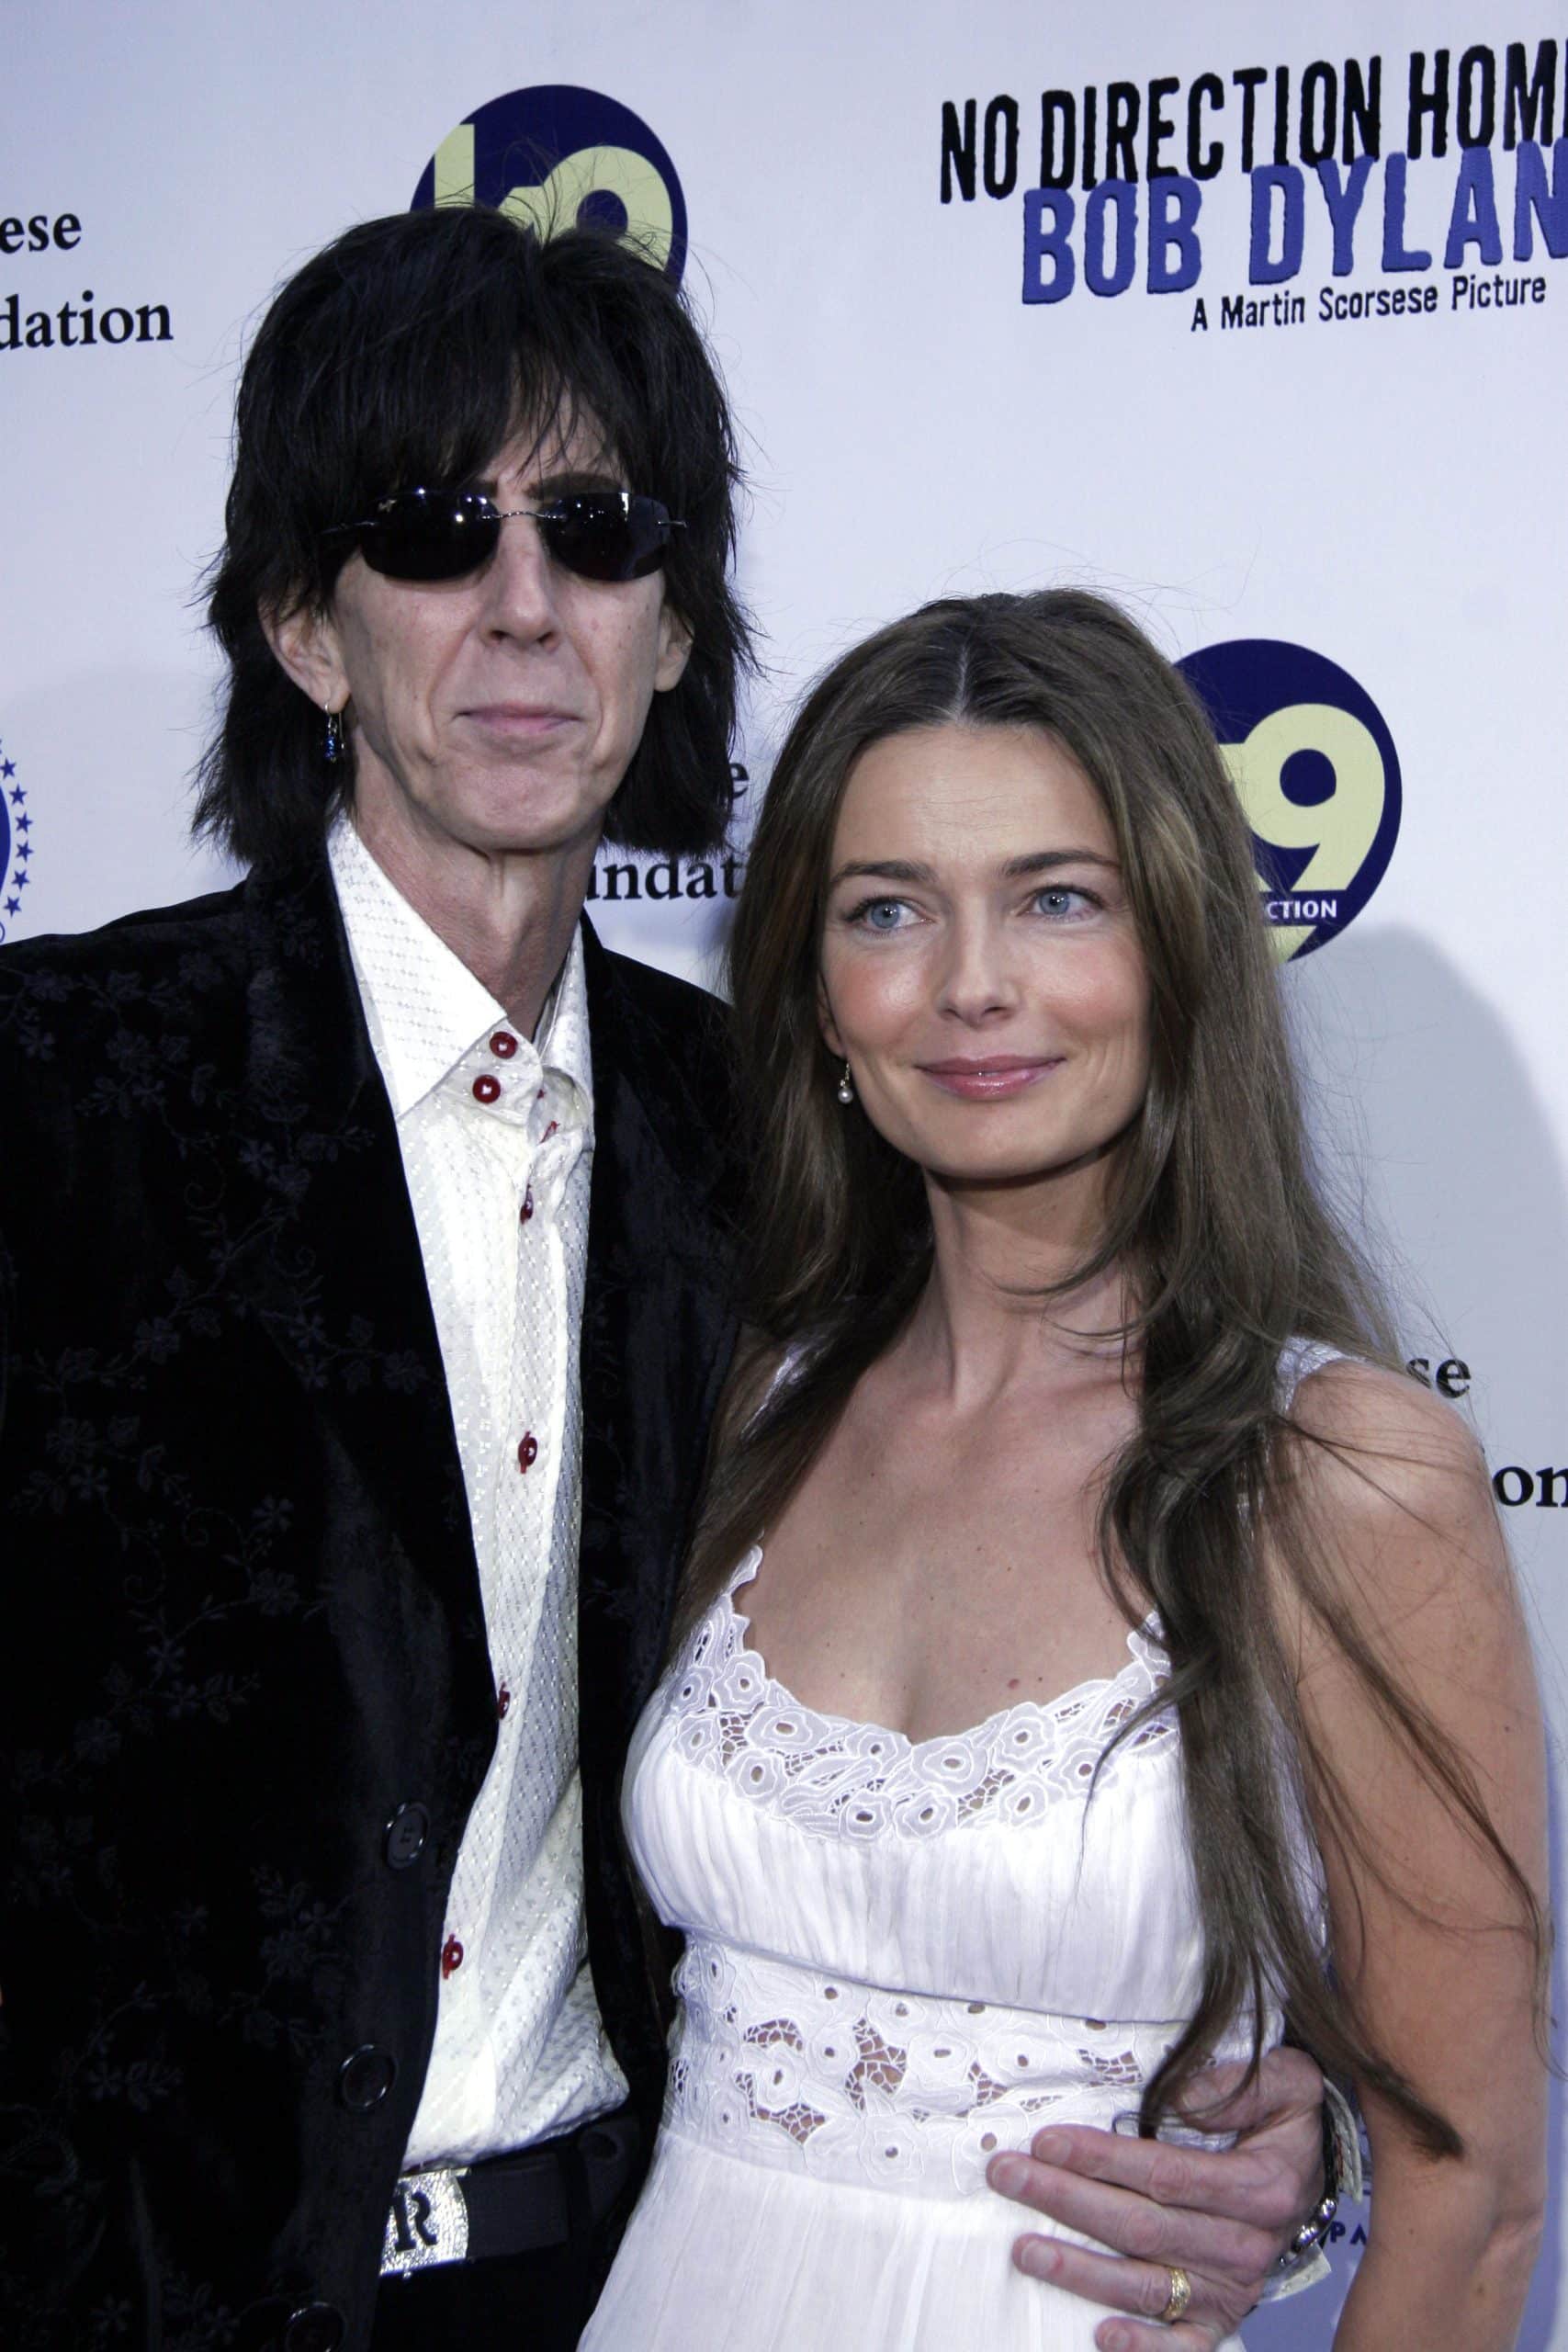 Singer Ric Ocasek and his wife actress Paulina Porizkova